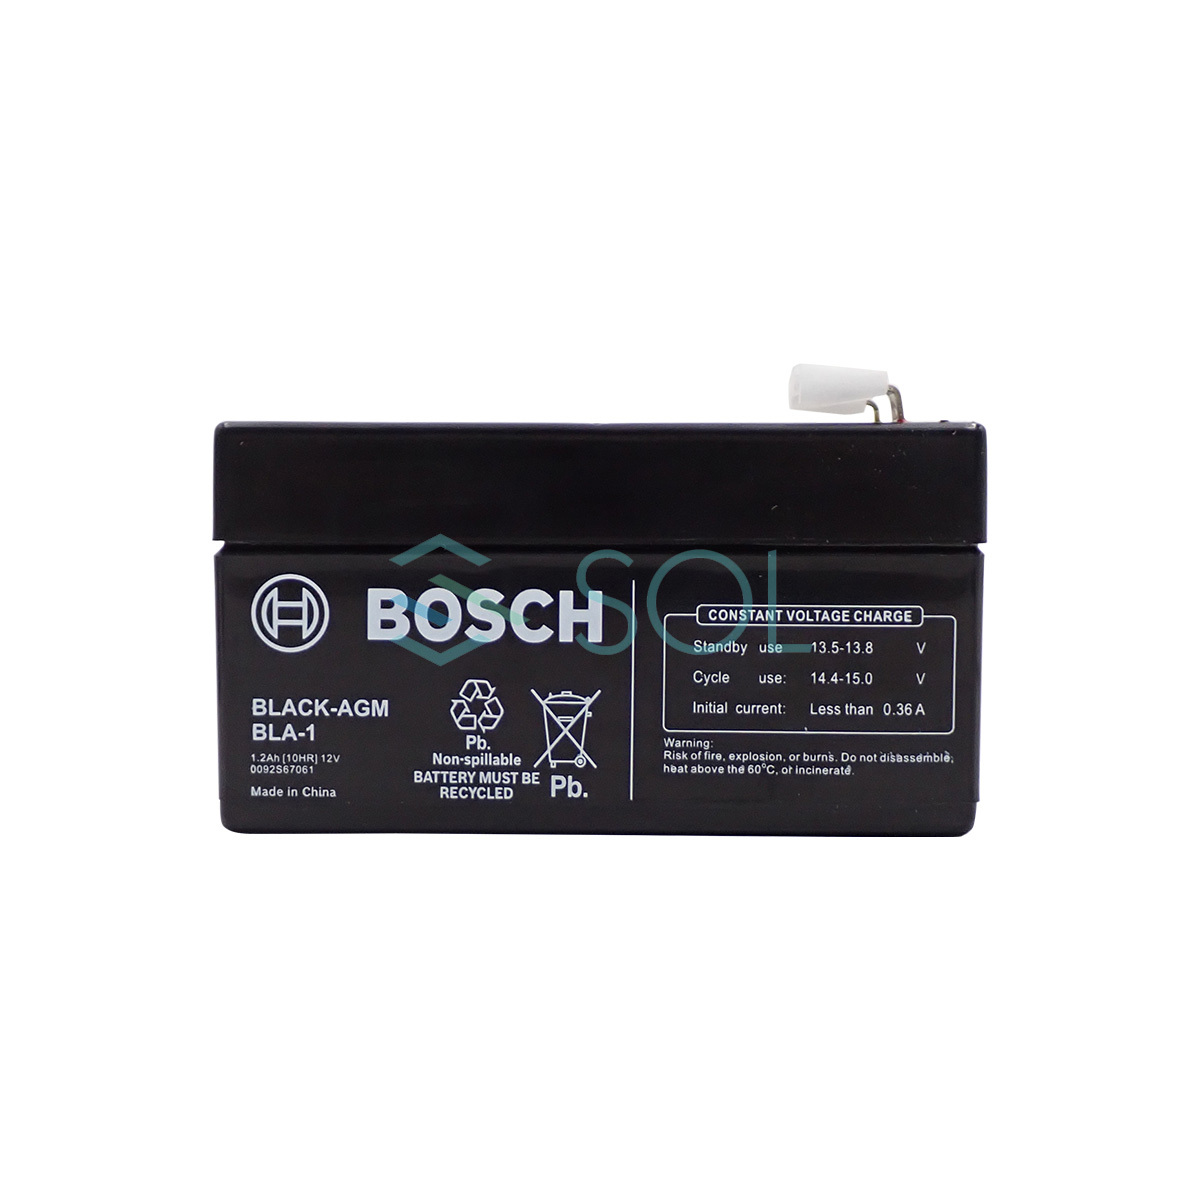 BOSCH製 ベンツ 補機バッテリー サブバッテリー BLA-1 12V 1.2Ah BLACK-AGM バックアップバッテリー Eクラス W212 R230 X204_画像2